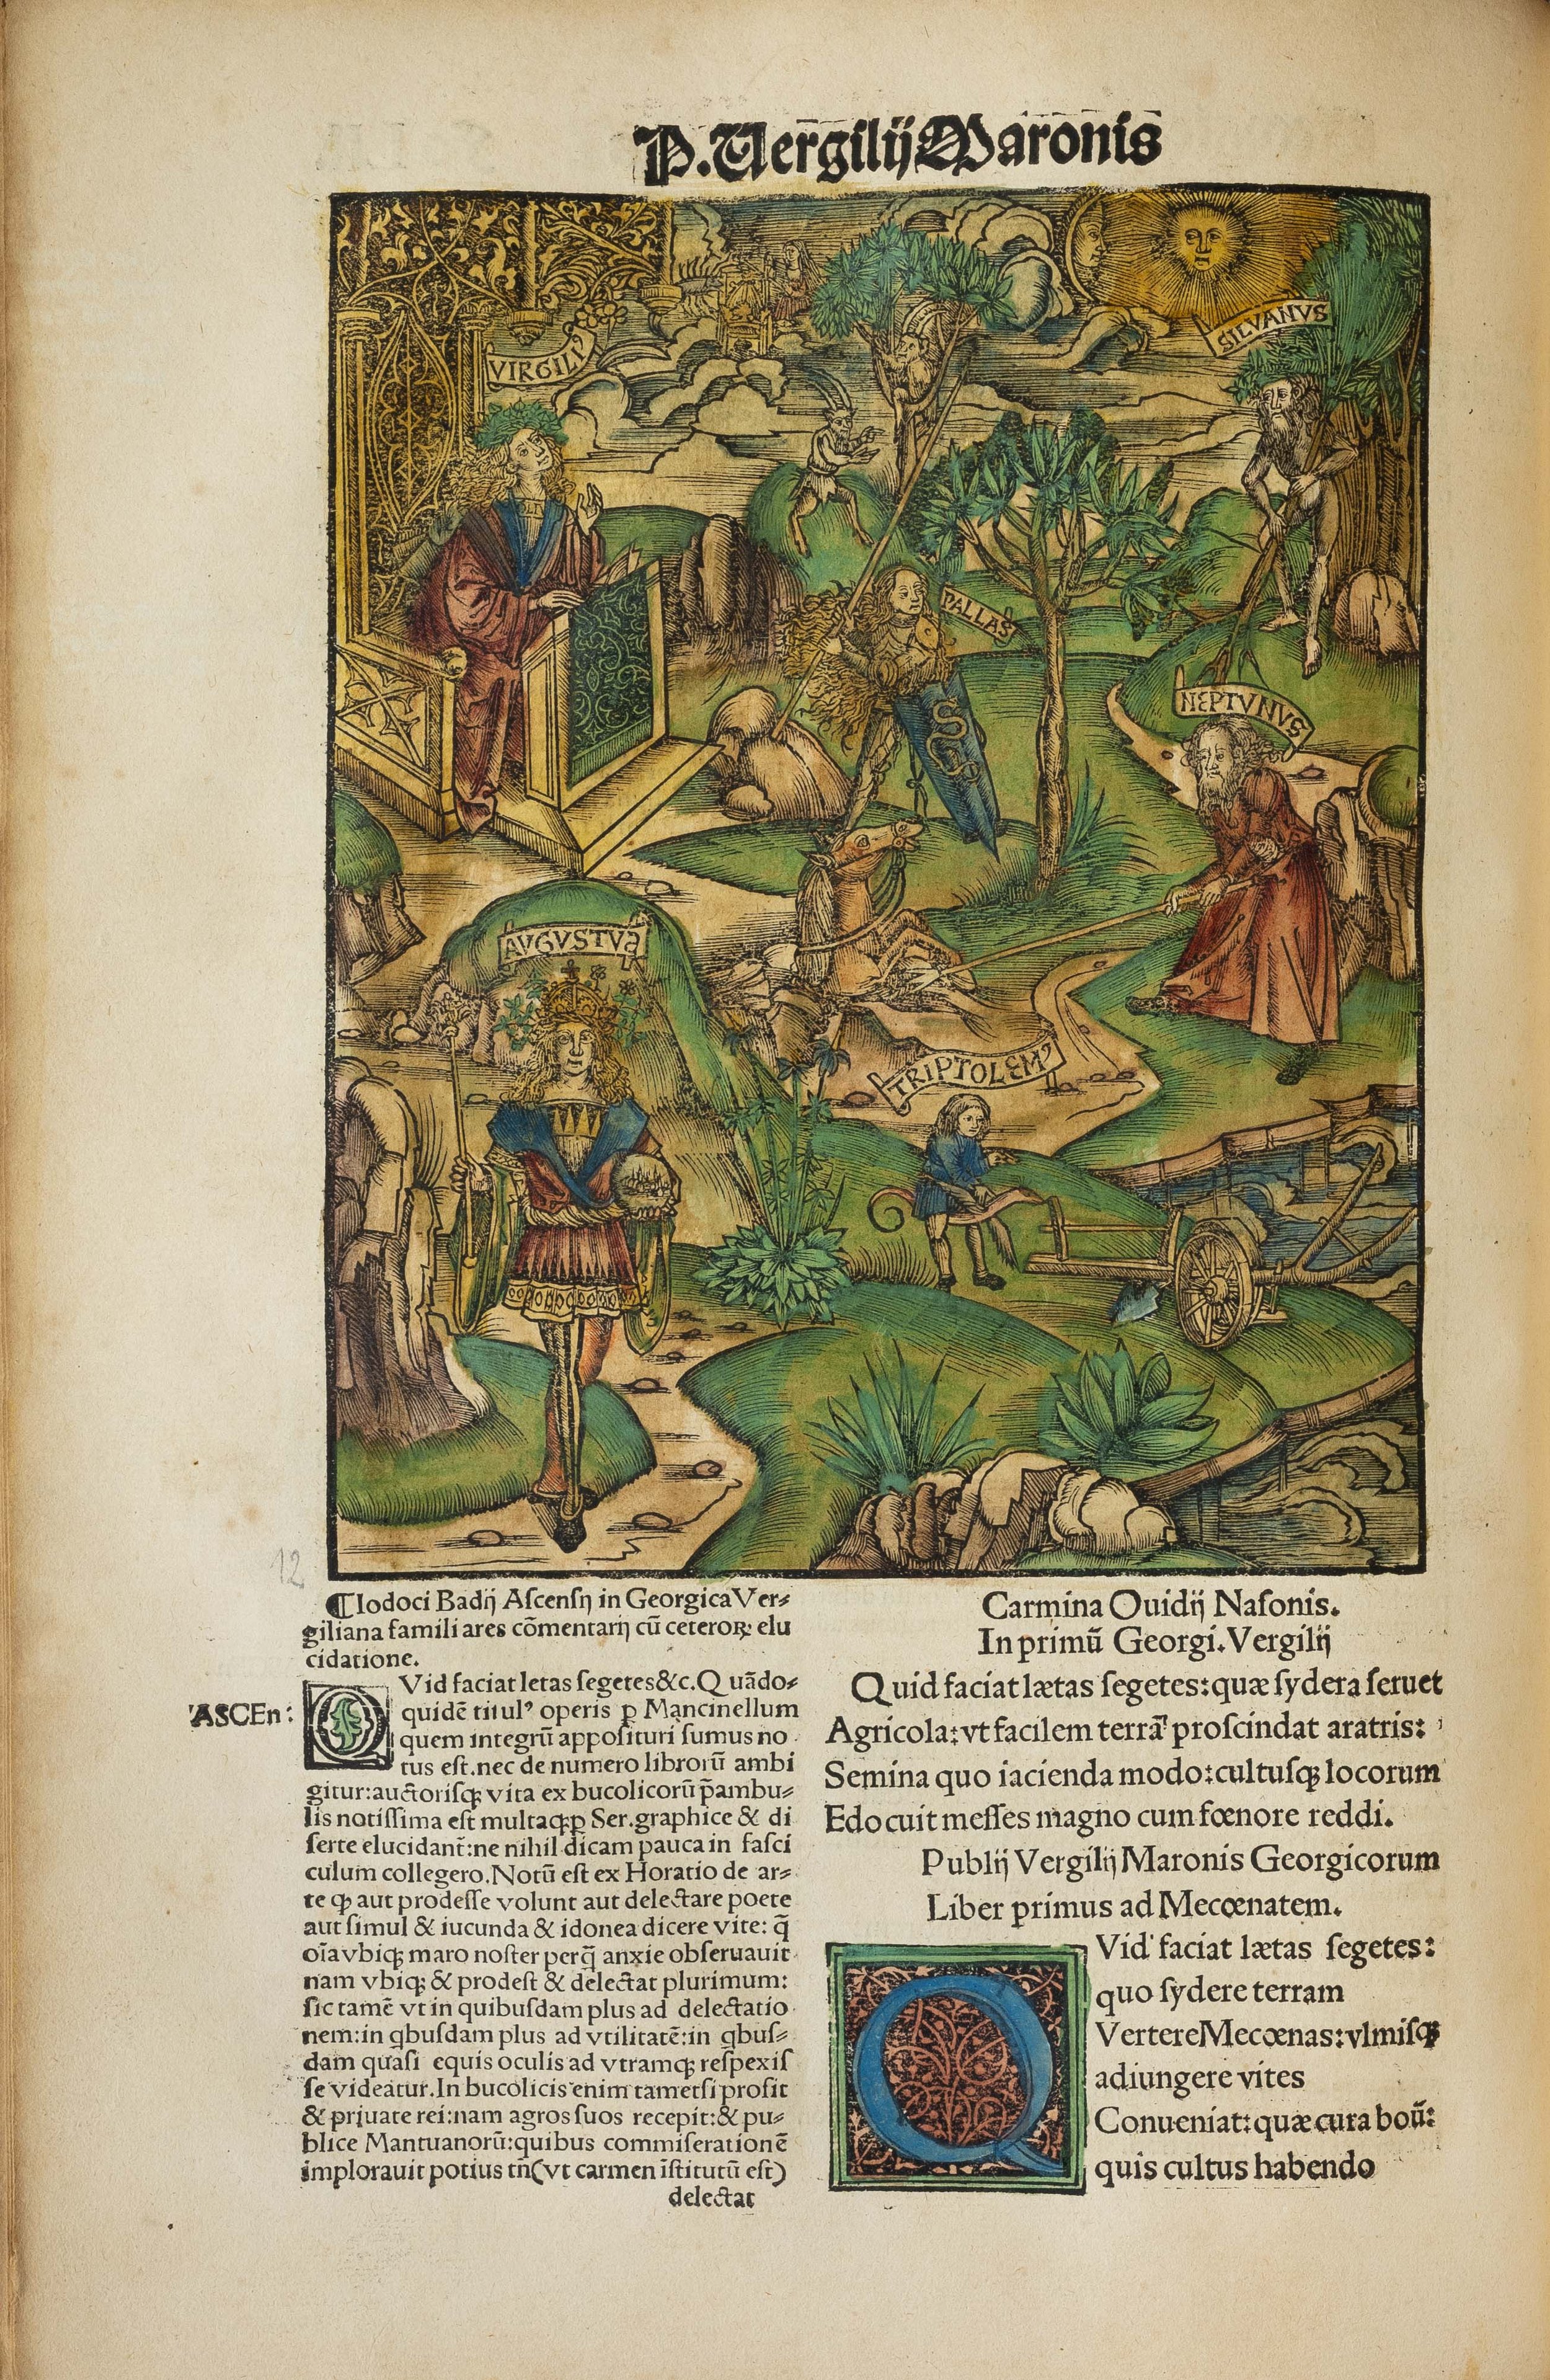 vergil-opera-1517-lyon-hand-coloured-woodcuts-for-sale-5.jpg